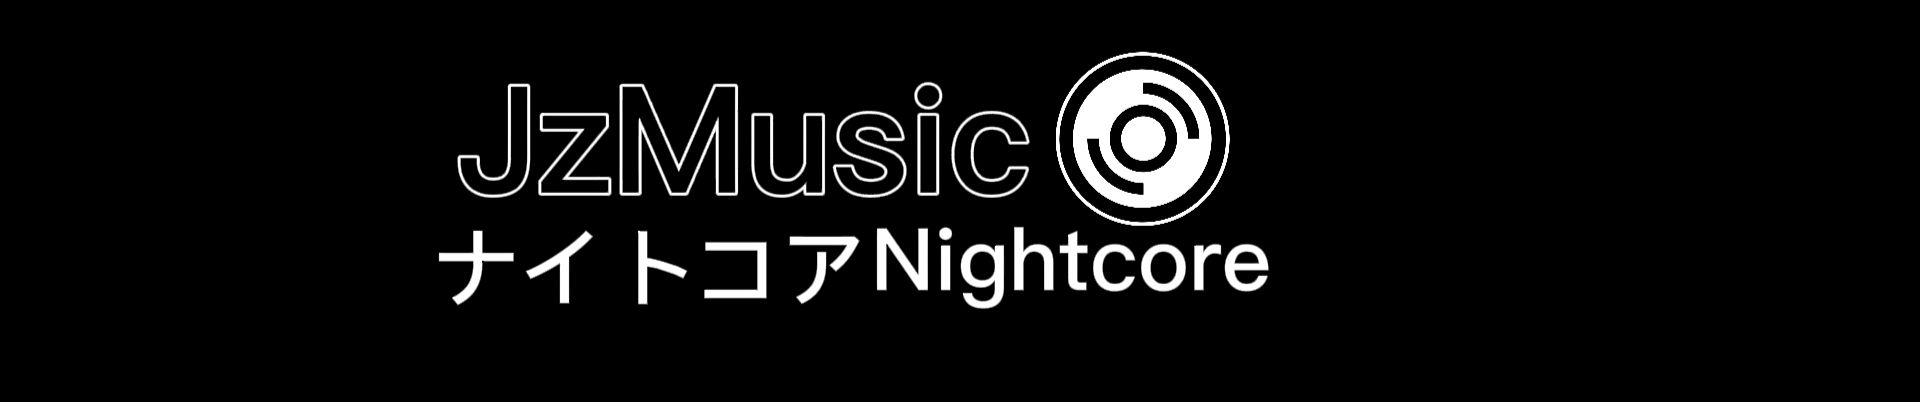 Stream Nightcore - Toxic Friends (BoyWithUke) (Lyrics) by jz music